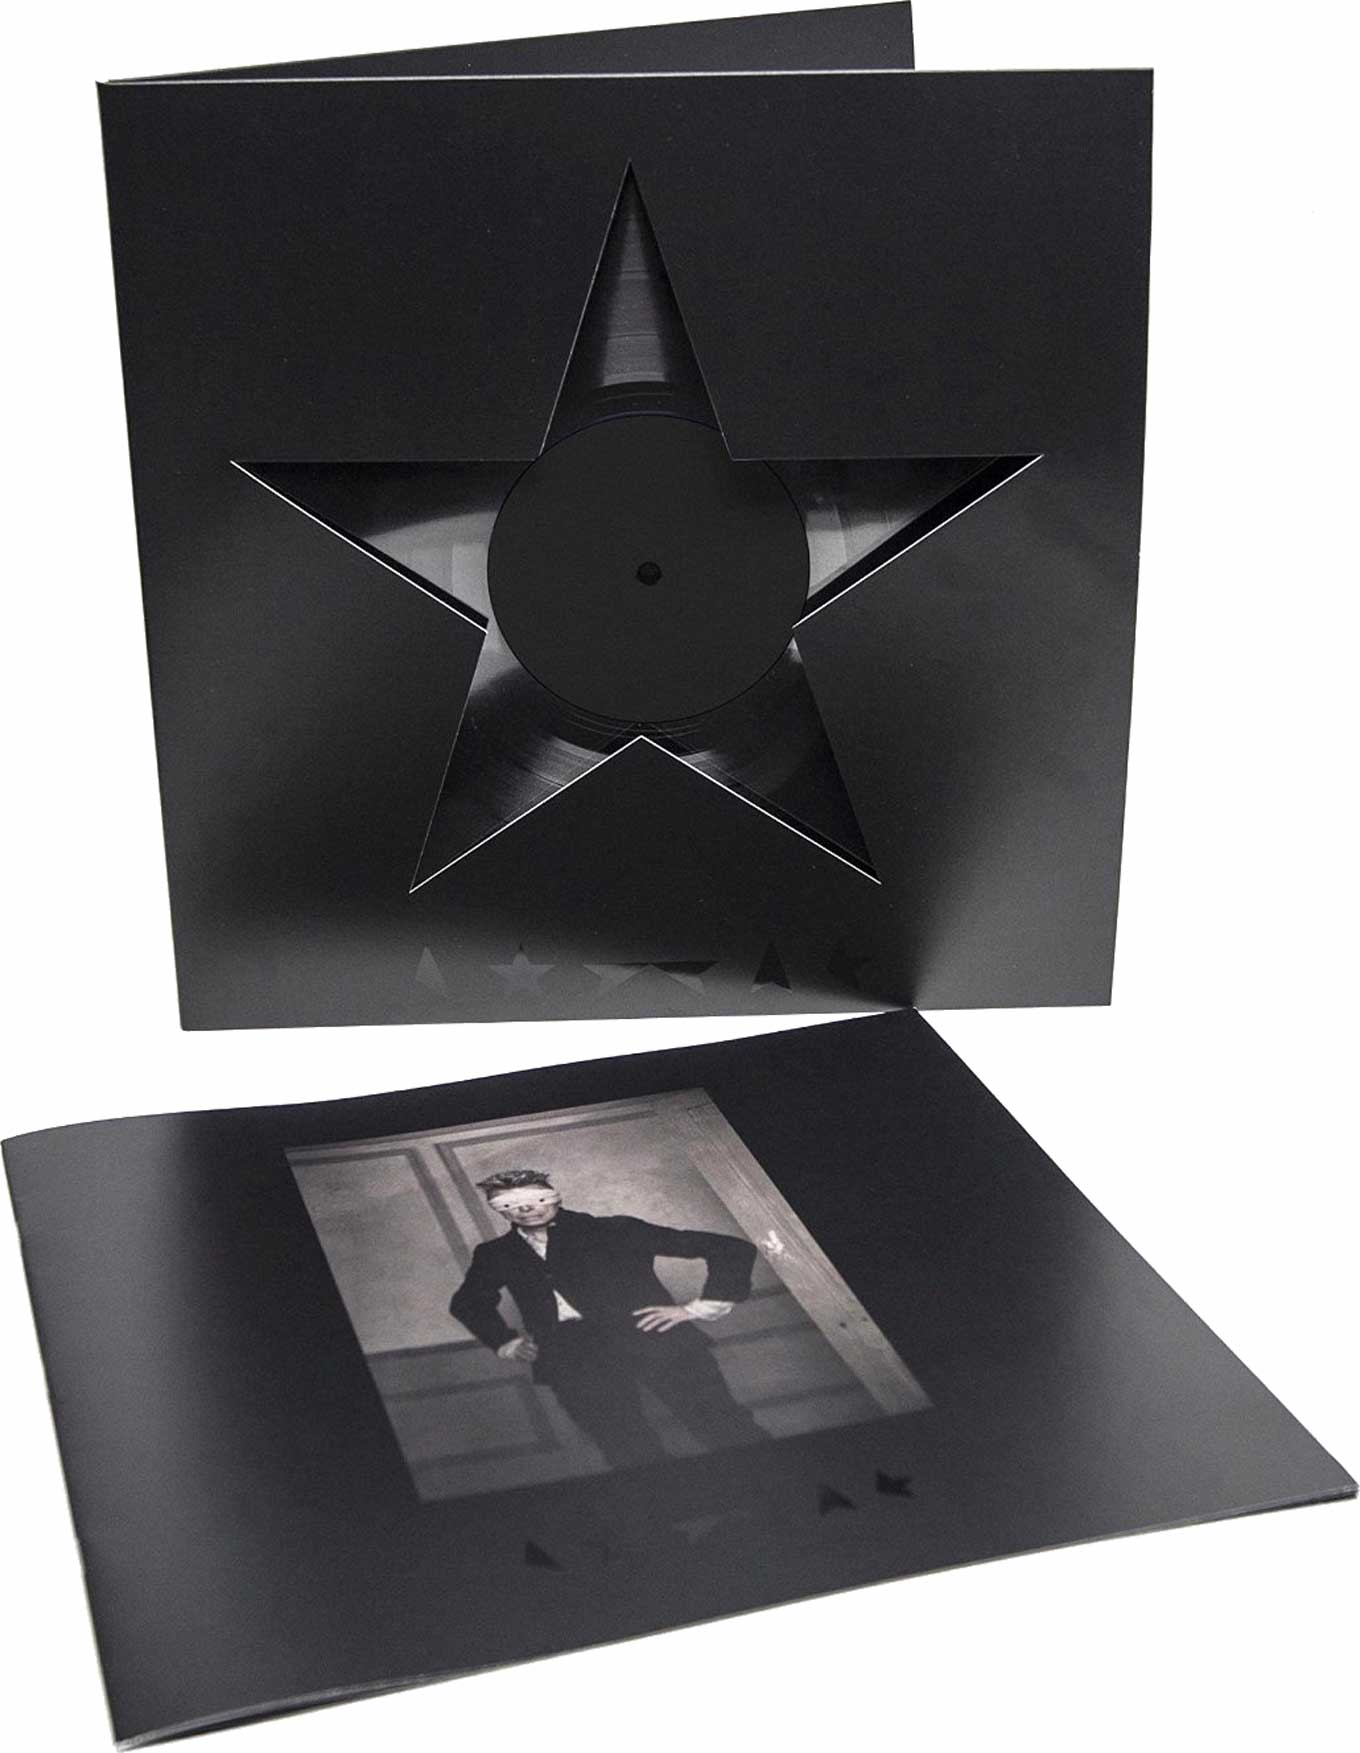 David Bowie Blackstar vinyl package